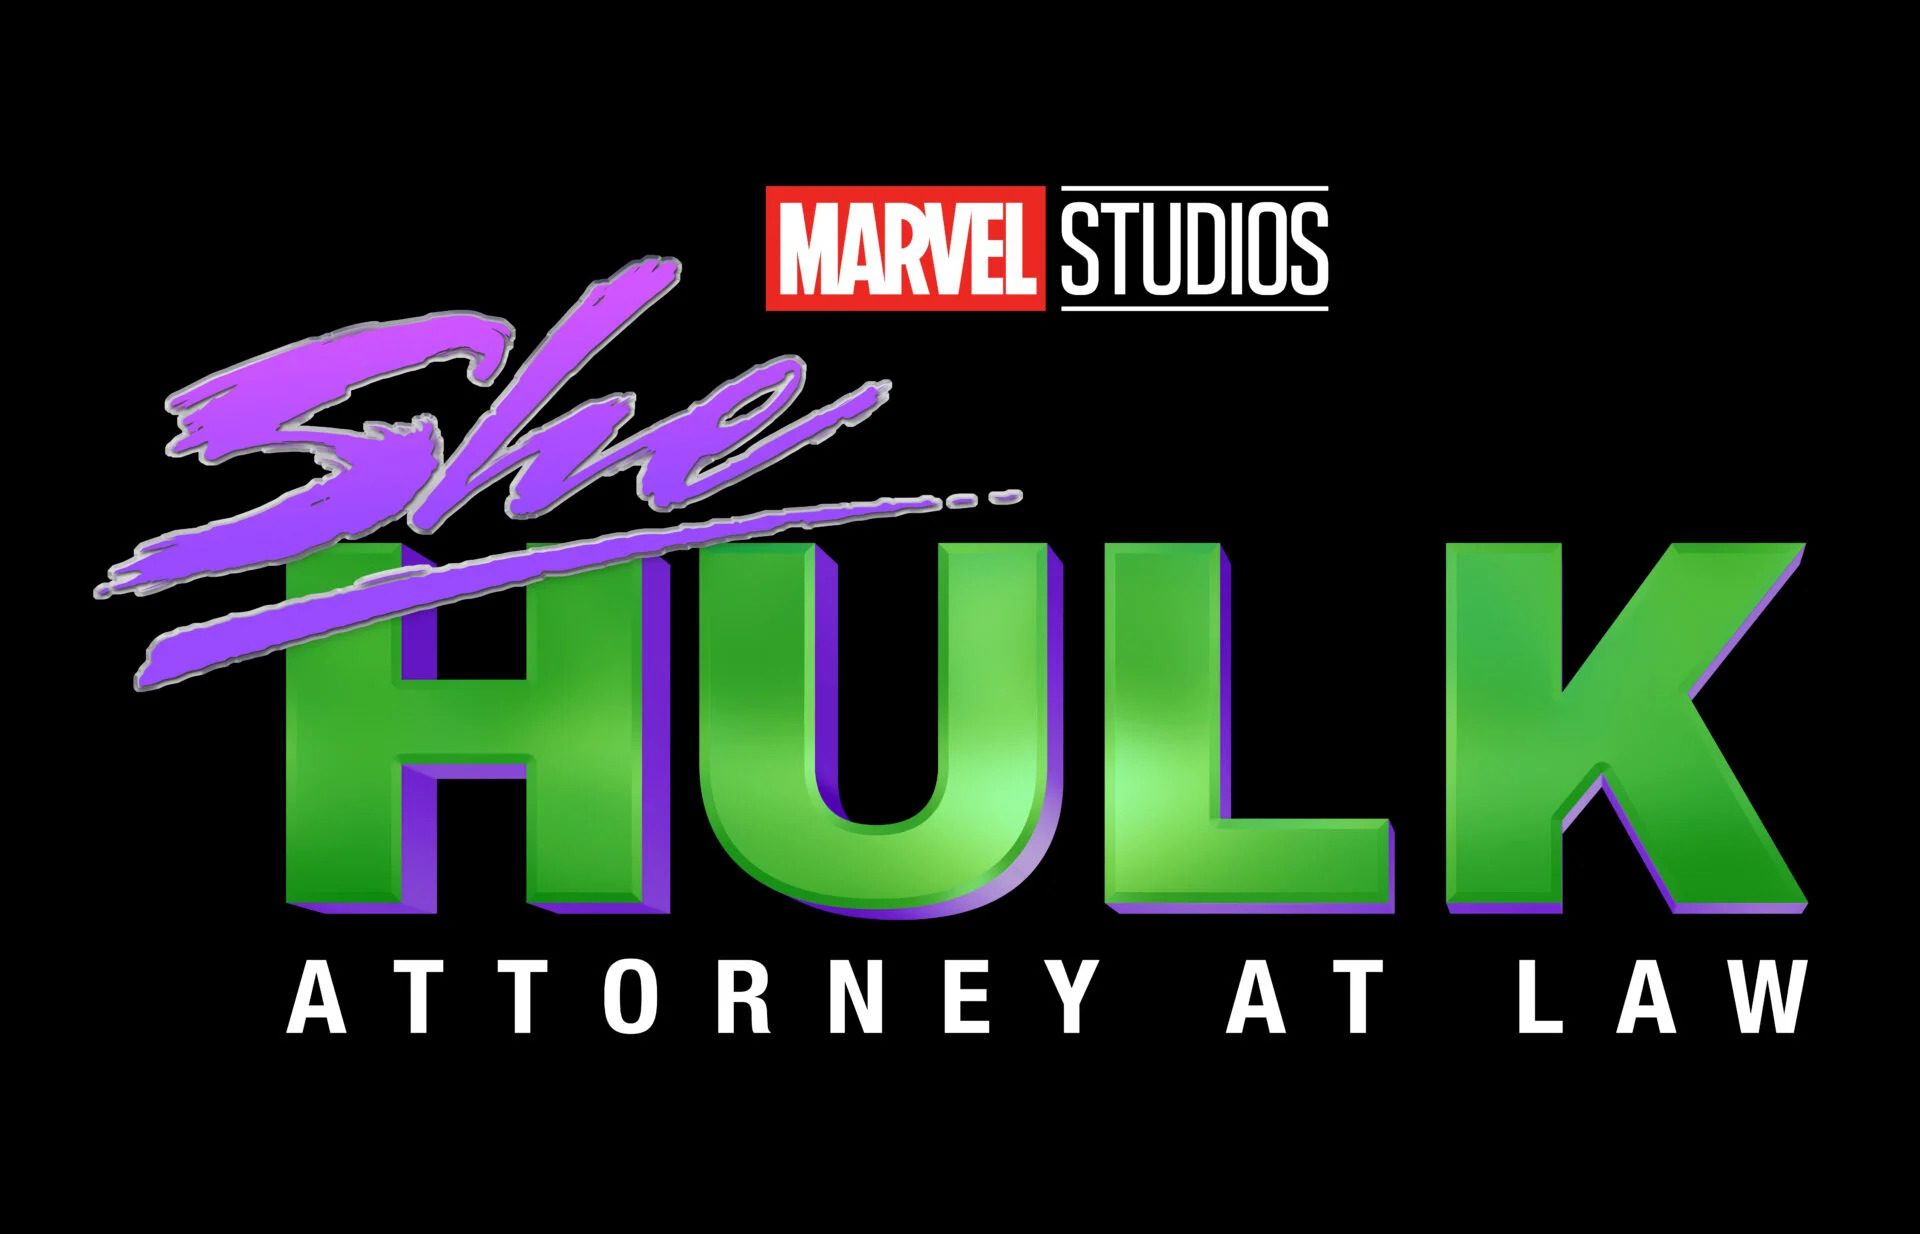 She Hulk Attorney At Law Episode Schedule